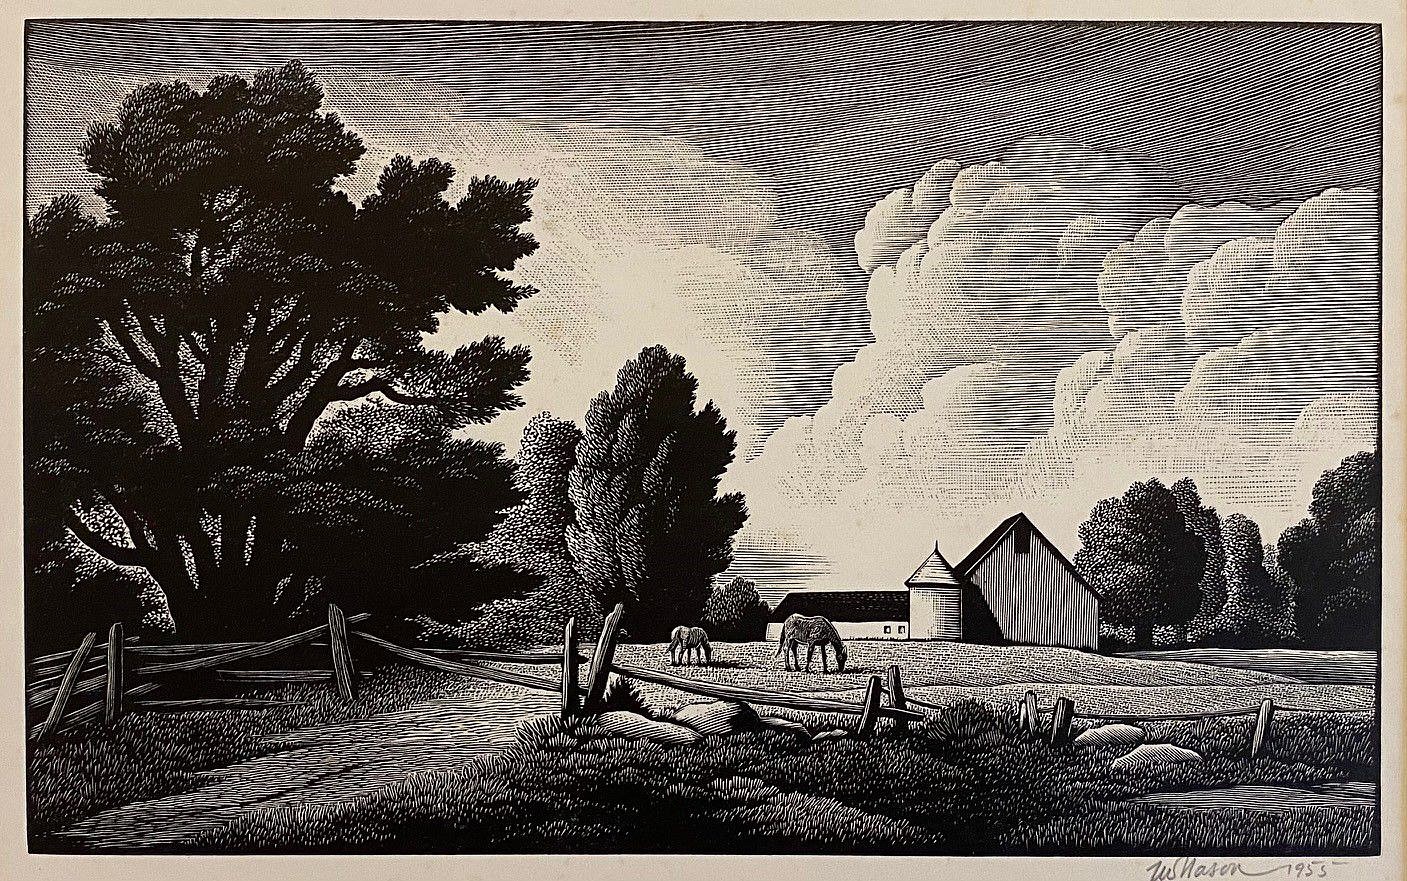 Thomas Willoughby Nason, The Little Farm, 1955
wood engraving on paper, 5 1/2"" x 9""
JCA 6533
$1,100